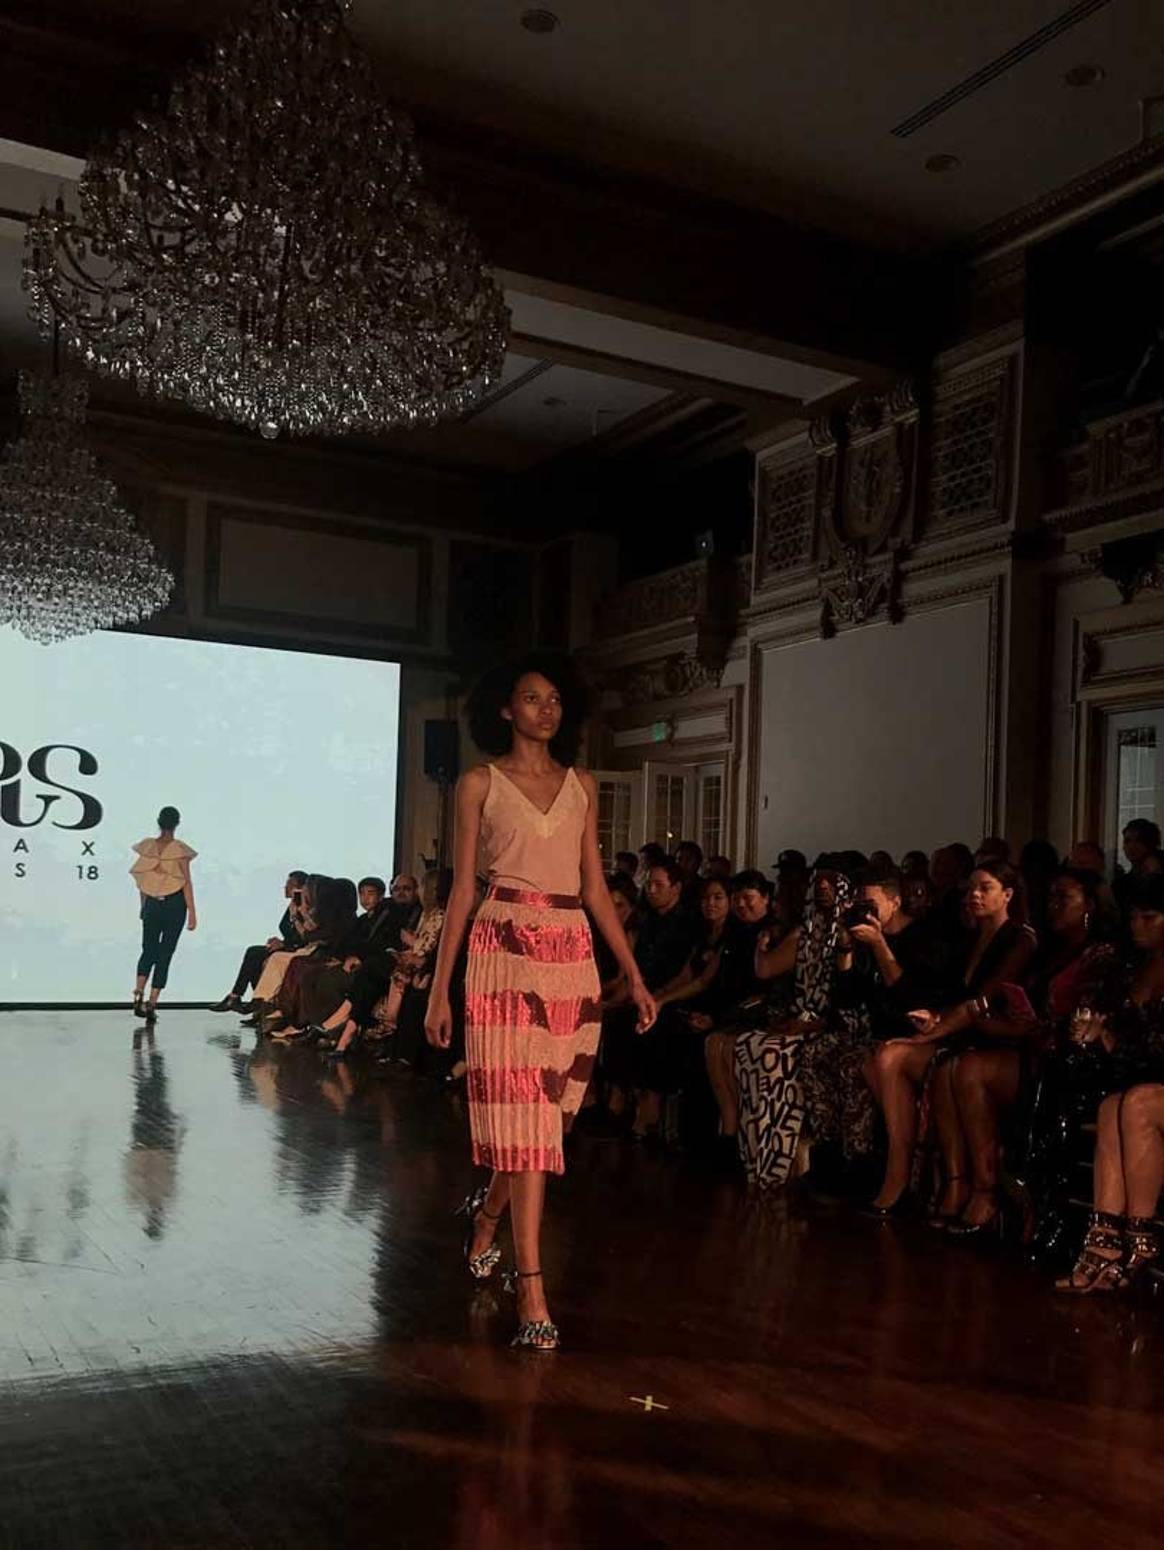 ASV brings West Coast relaxed fashion with a NY twist for LA Fashion Week